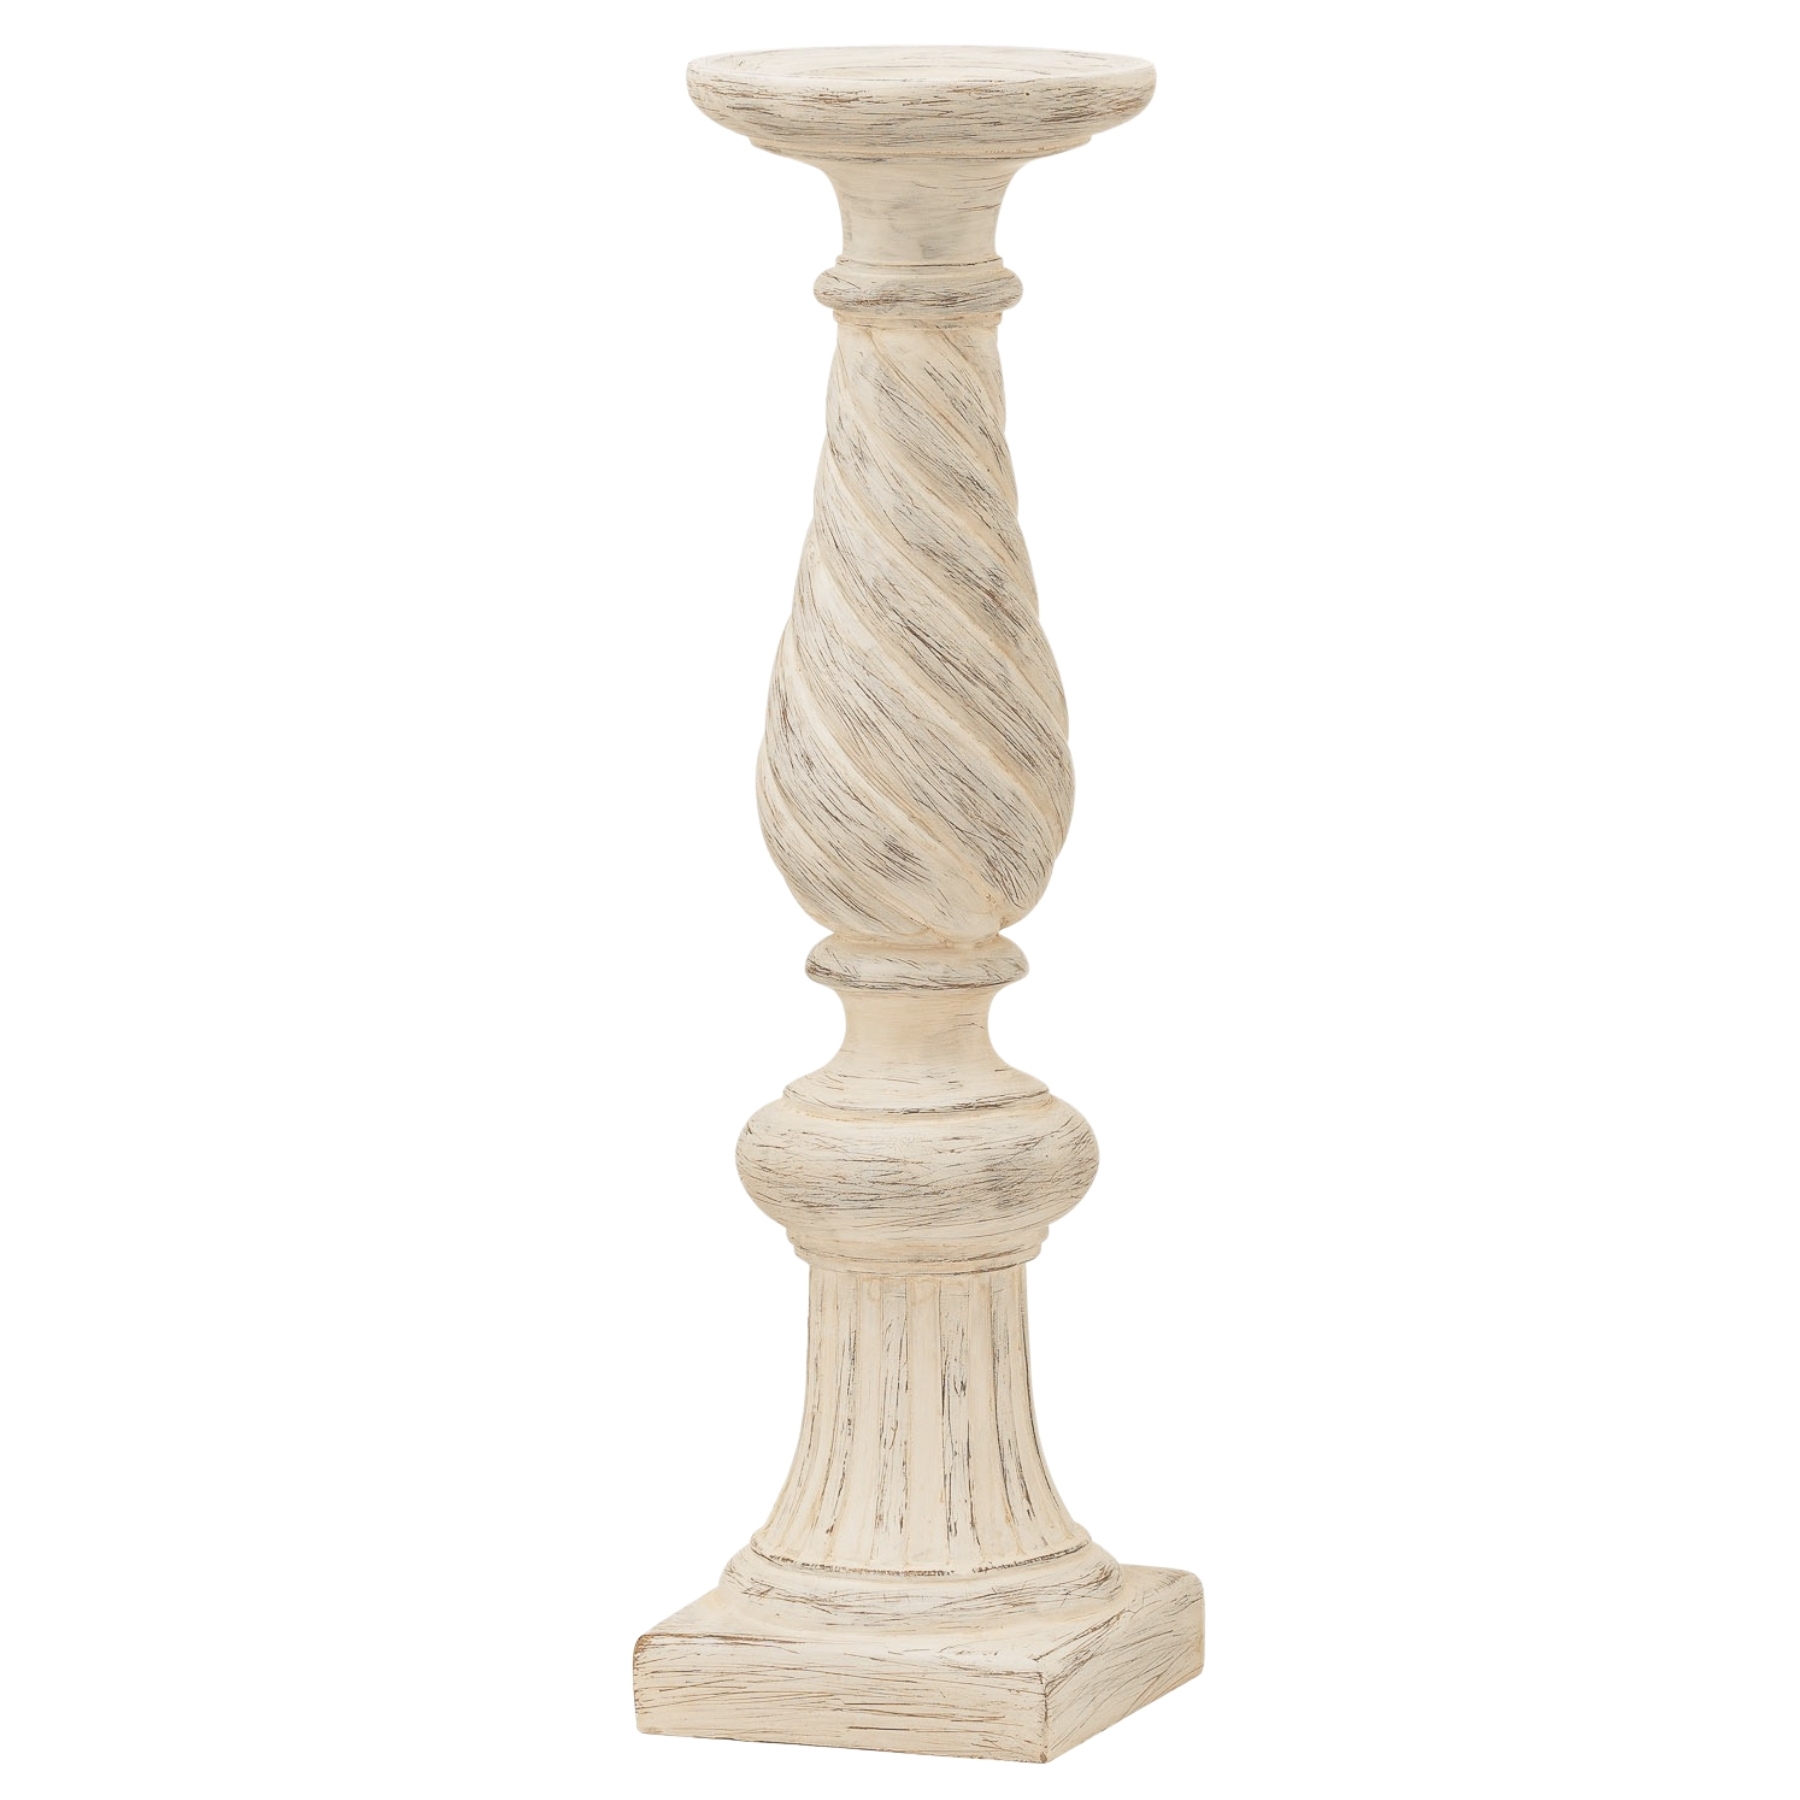 Antique Ivory Large Twisted Candle Column - Image 1